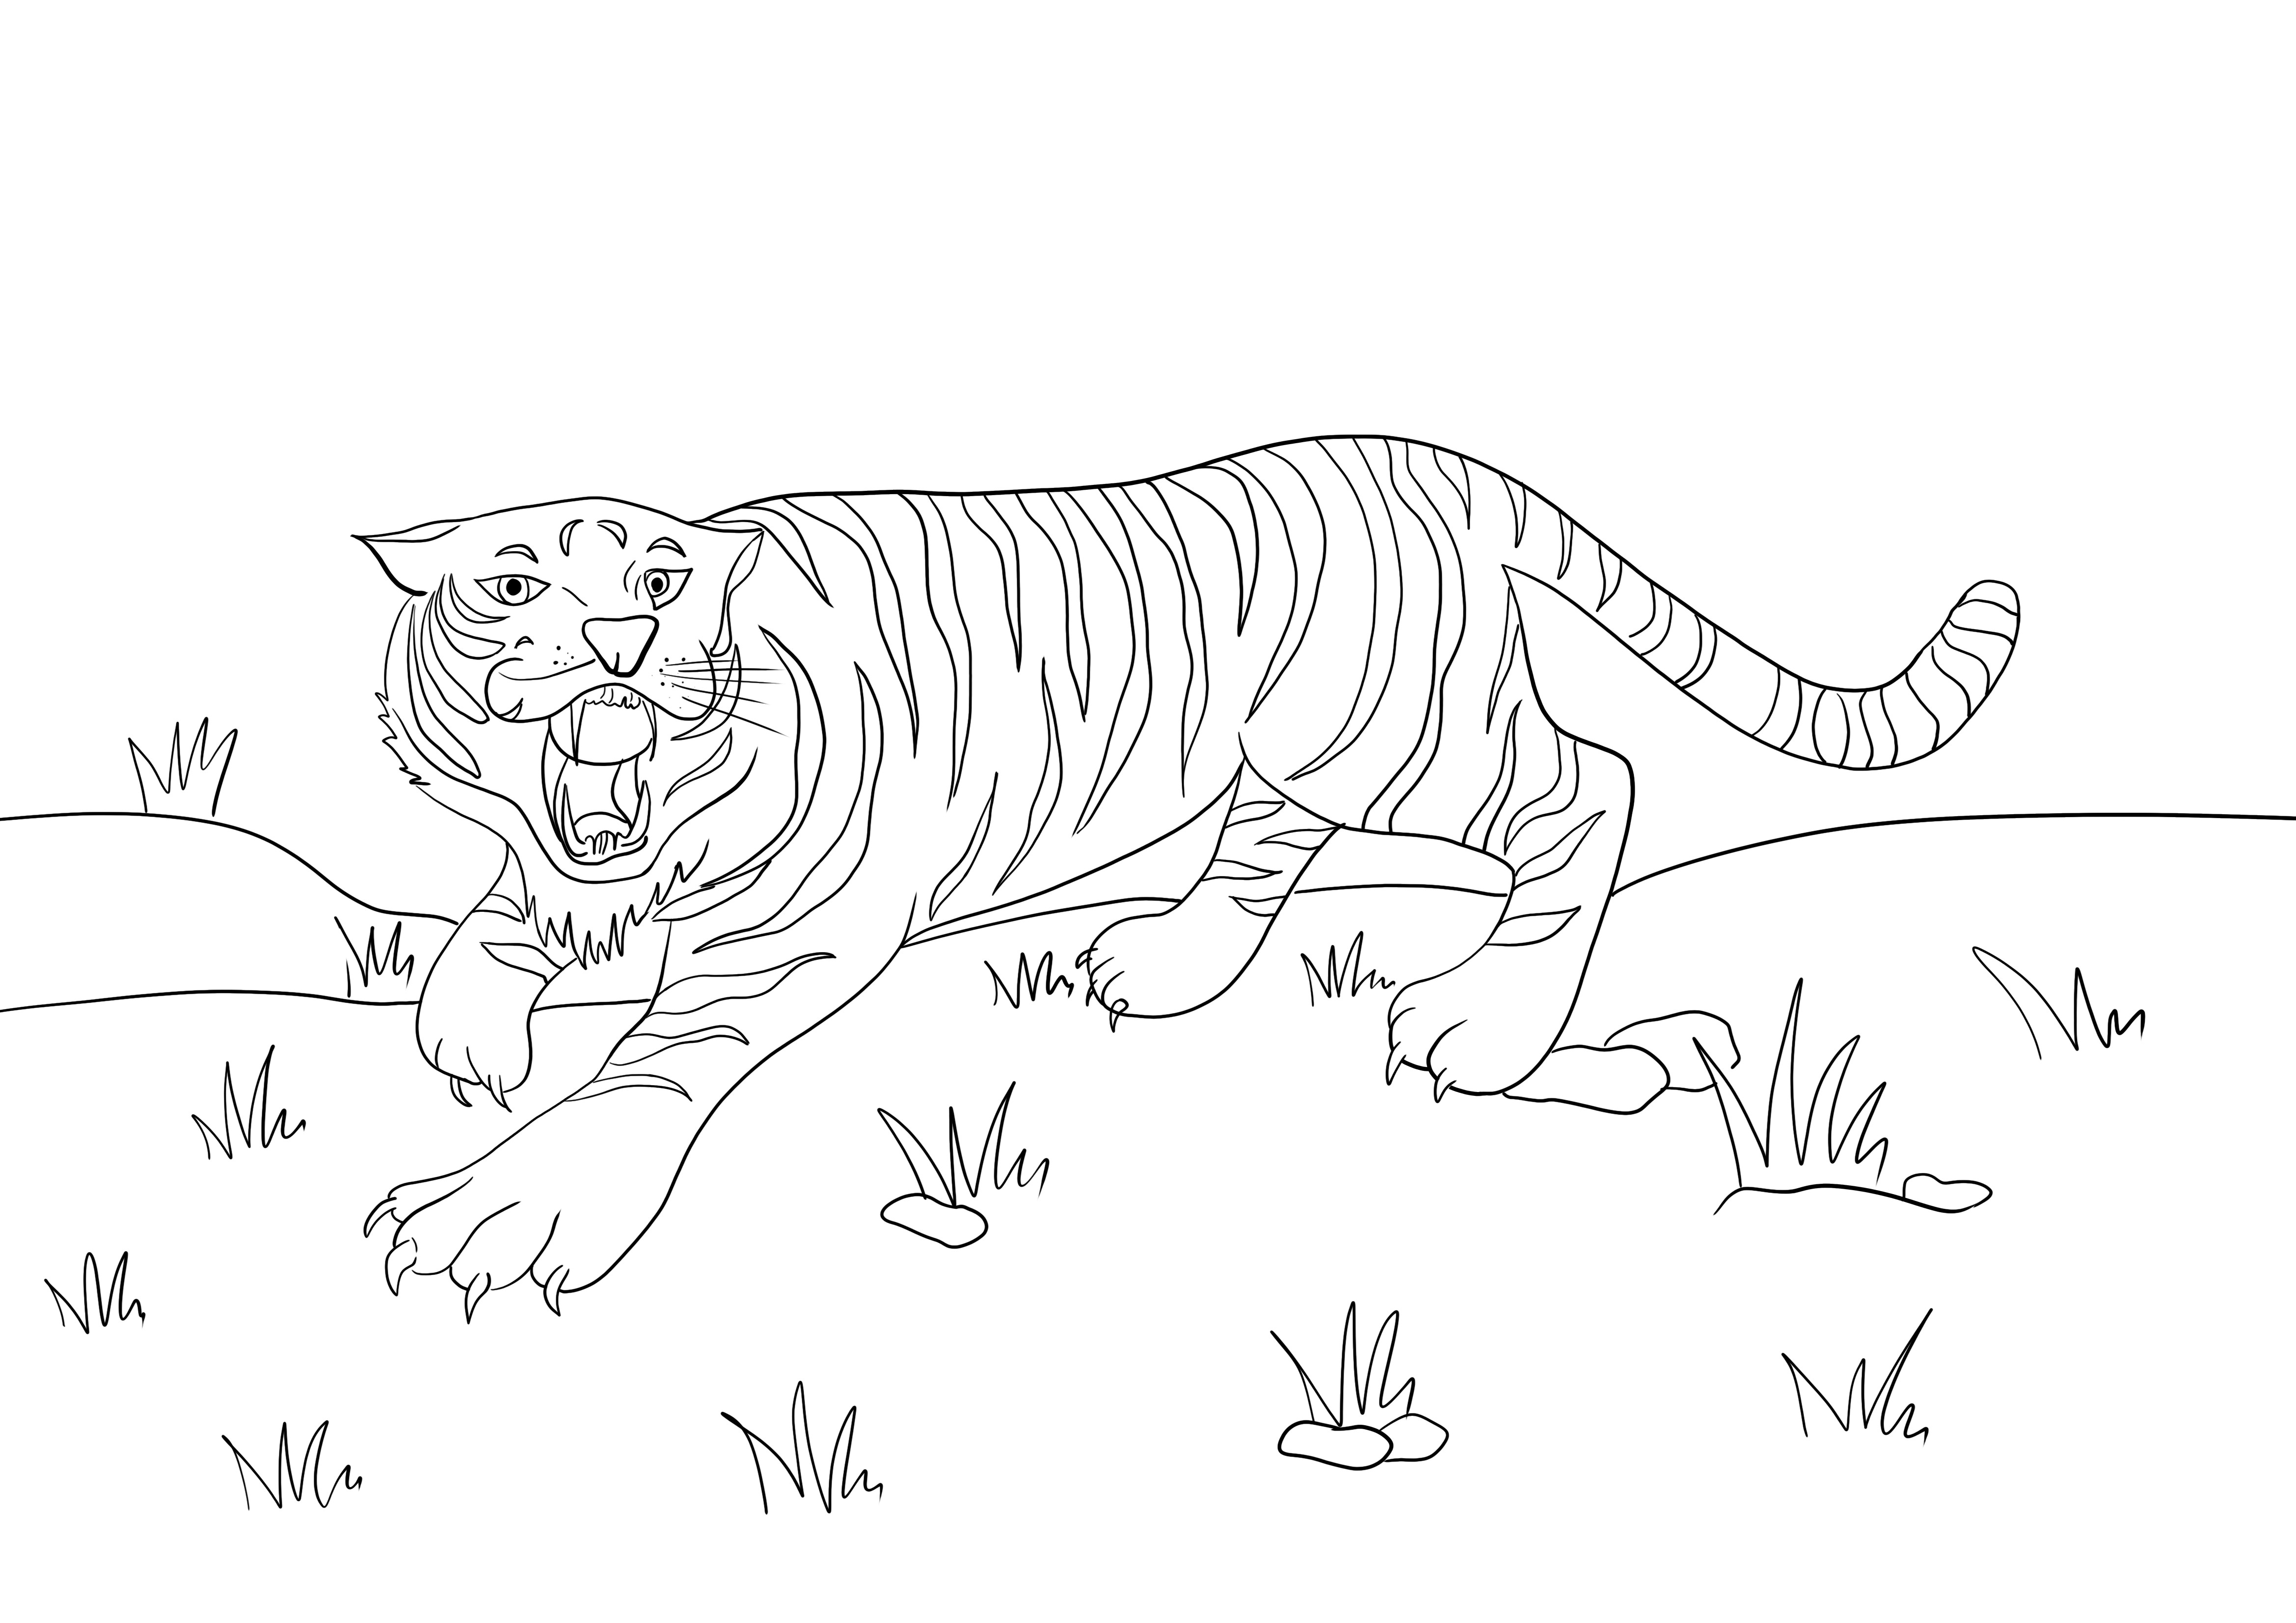 Roaring tiger coloring sheet for free printing